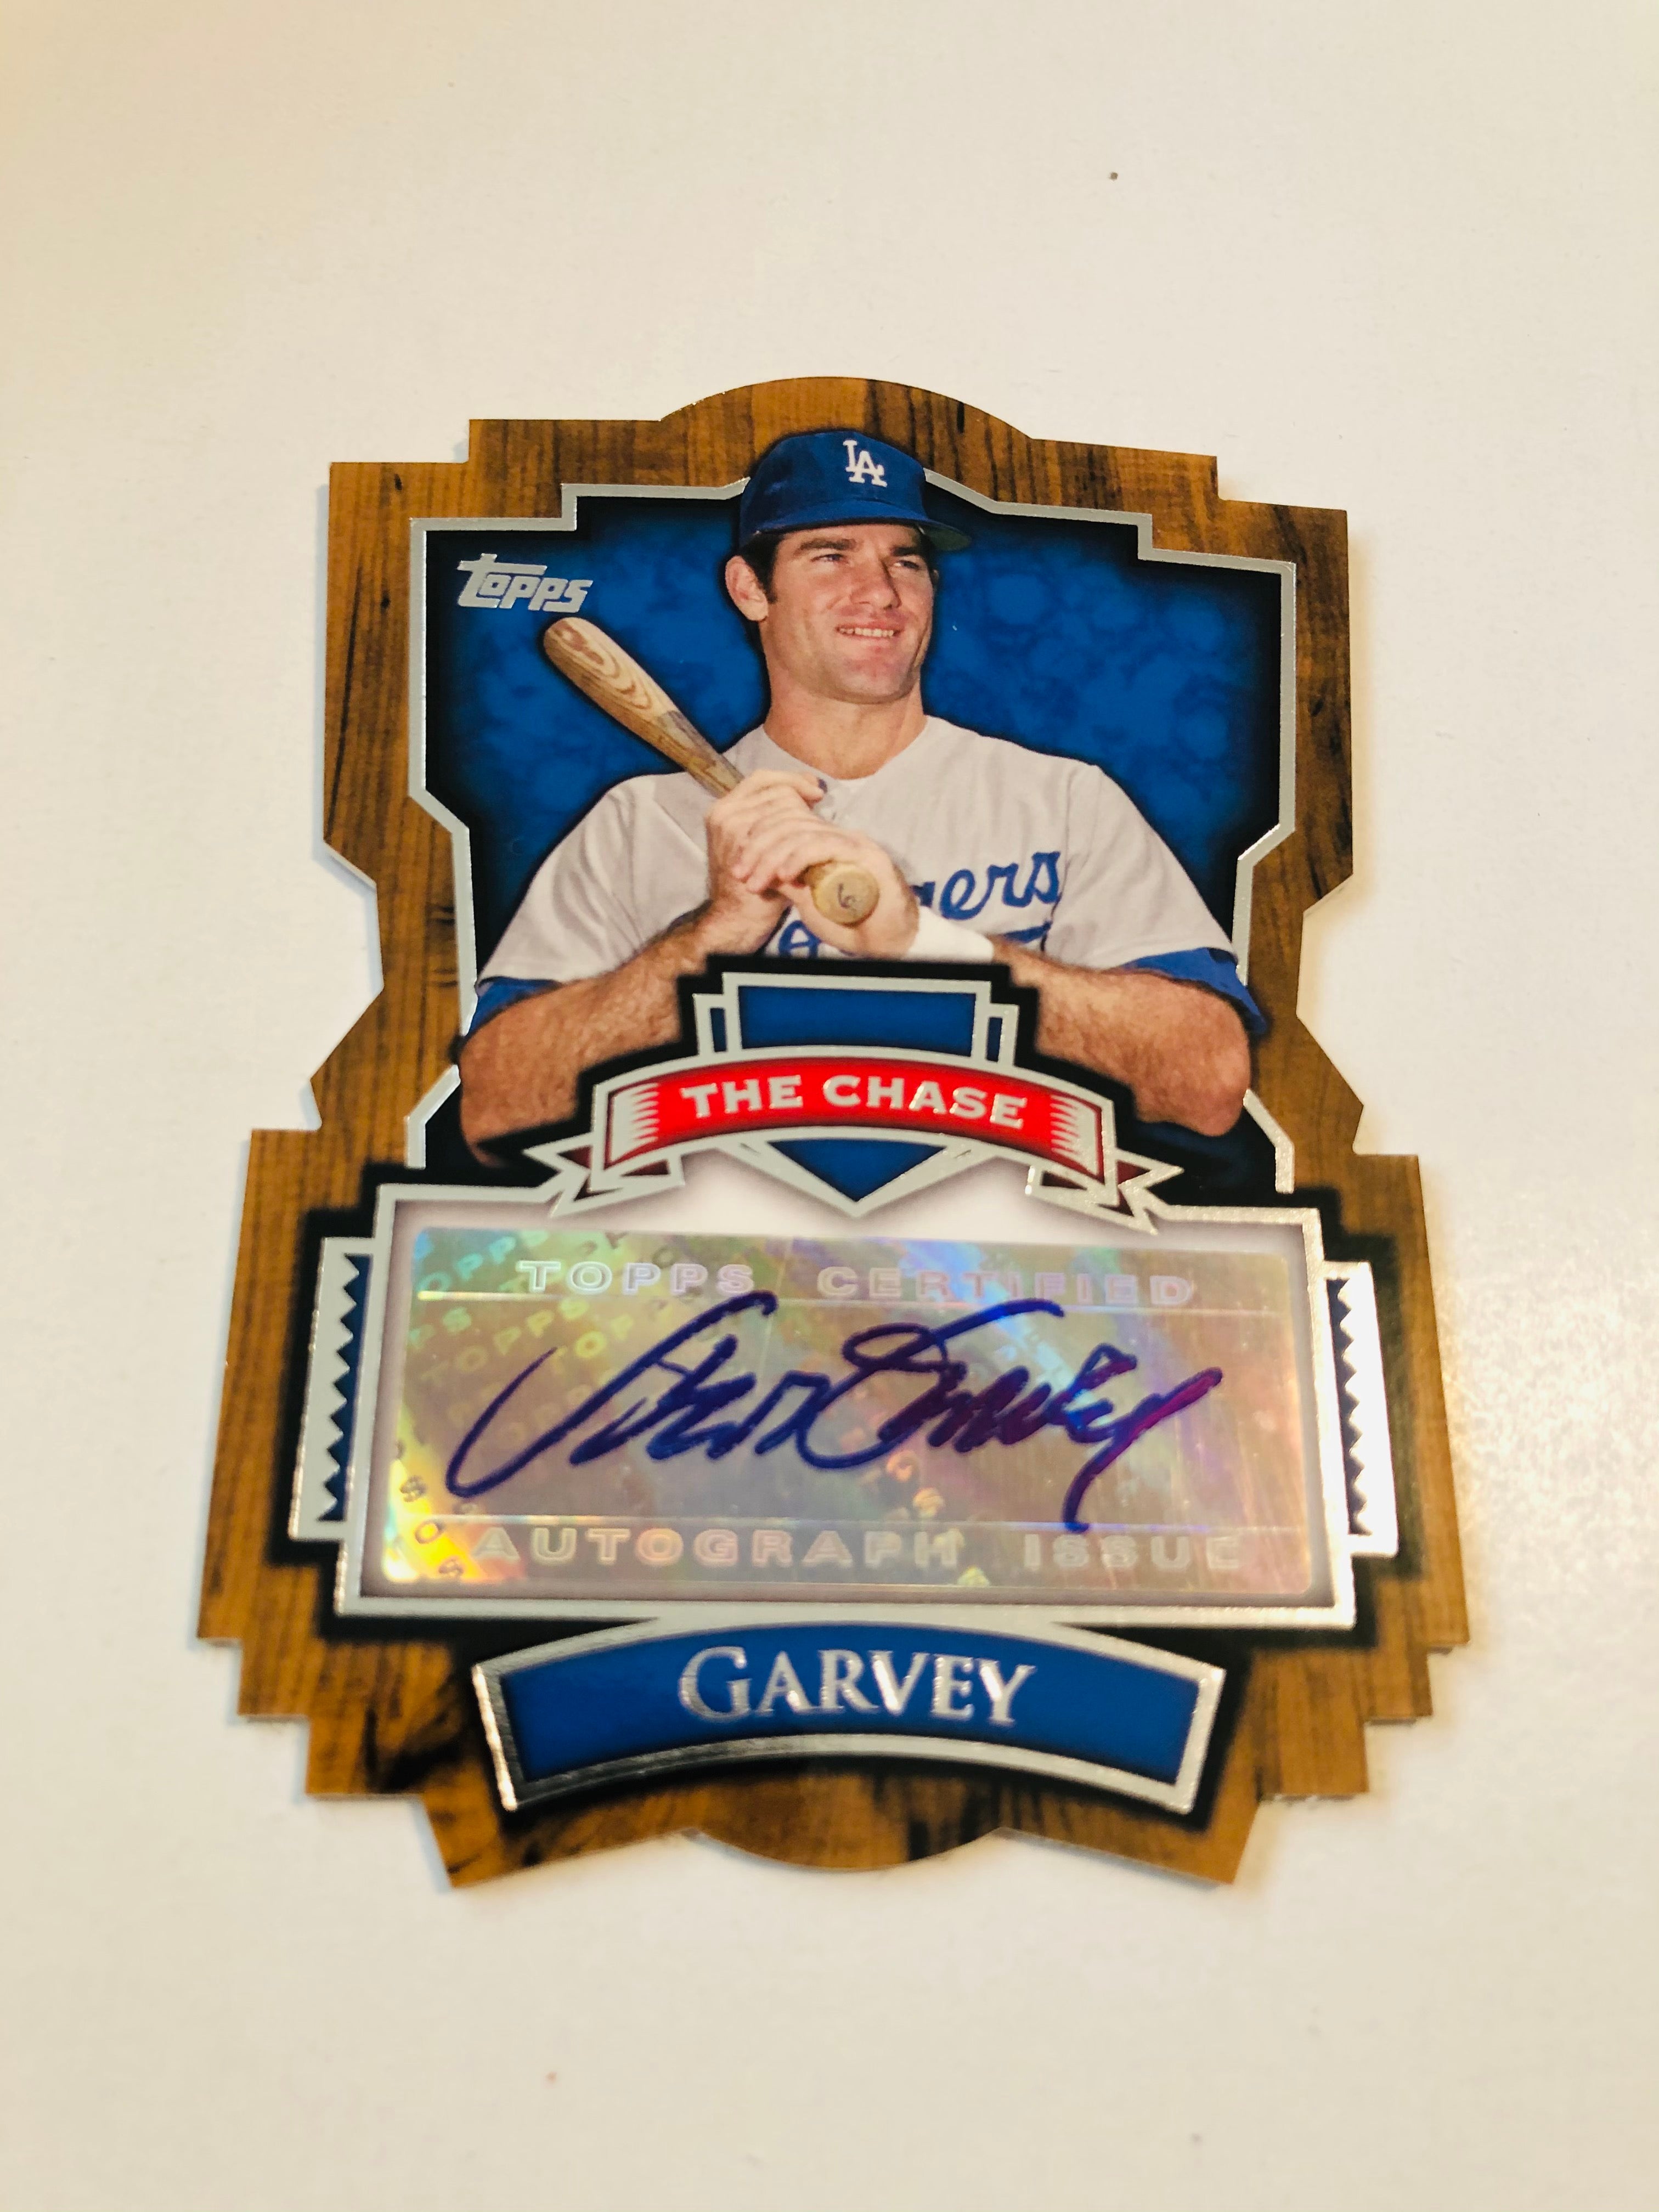 Steve Garvey LA Dodgers Topps autograph insert card